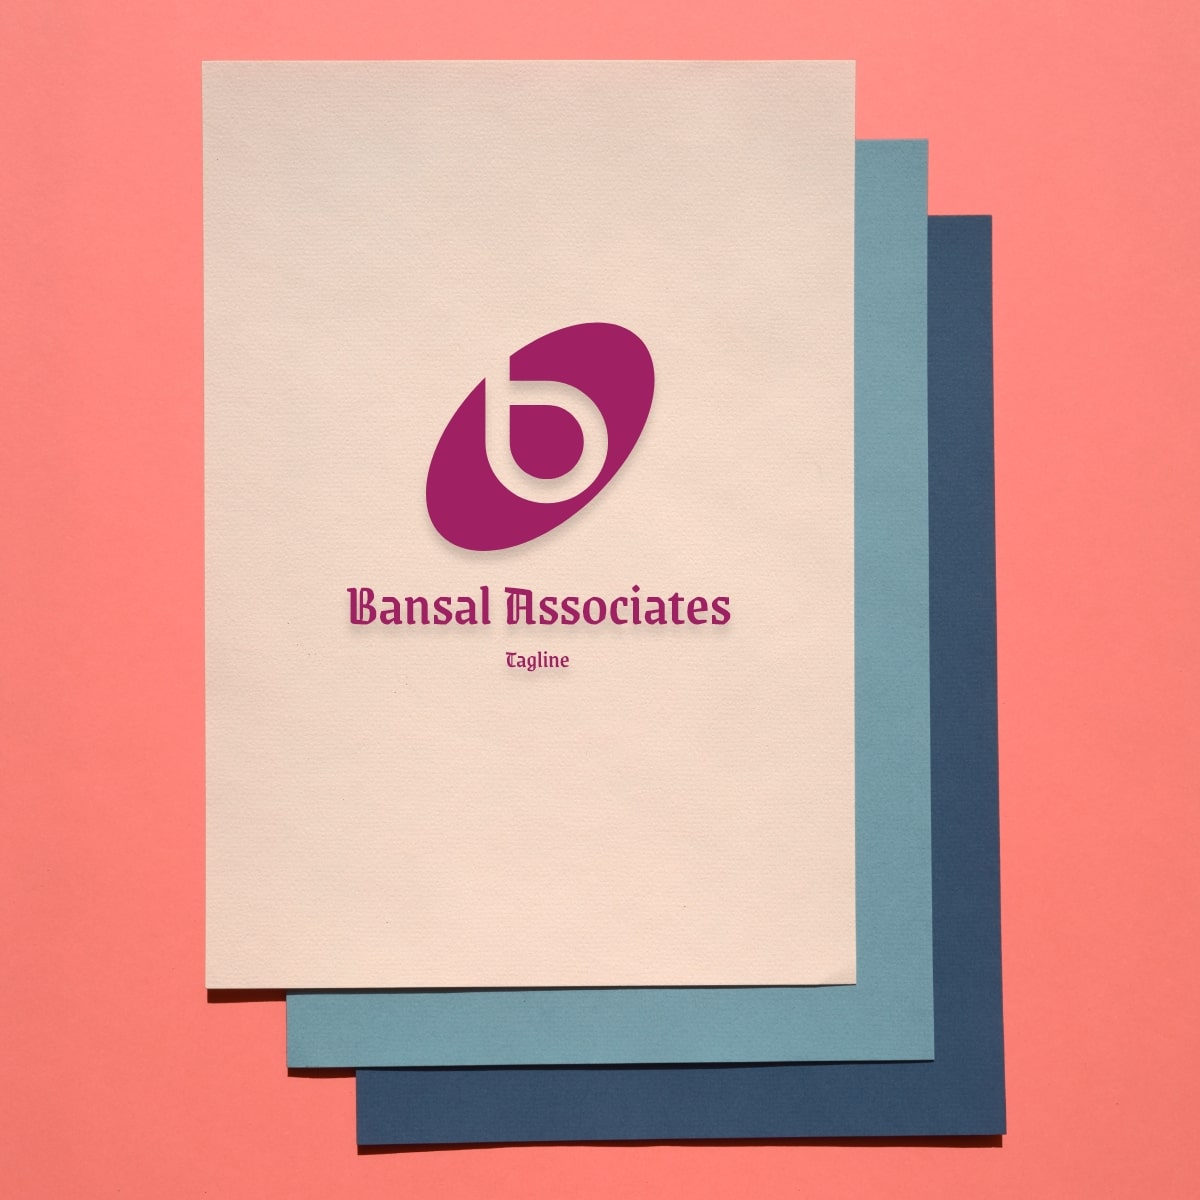 Bansal News - Crunchbase Company Profile & Funding